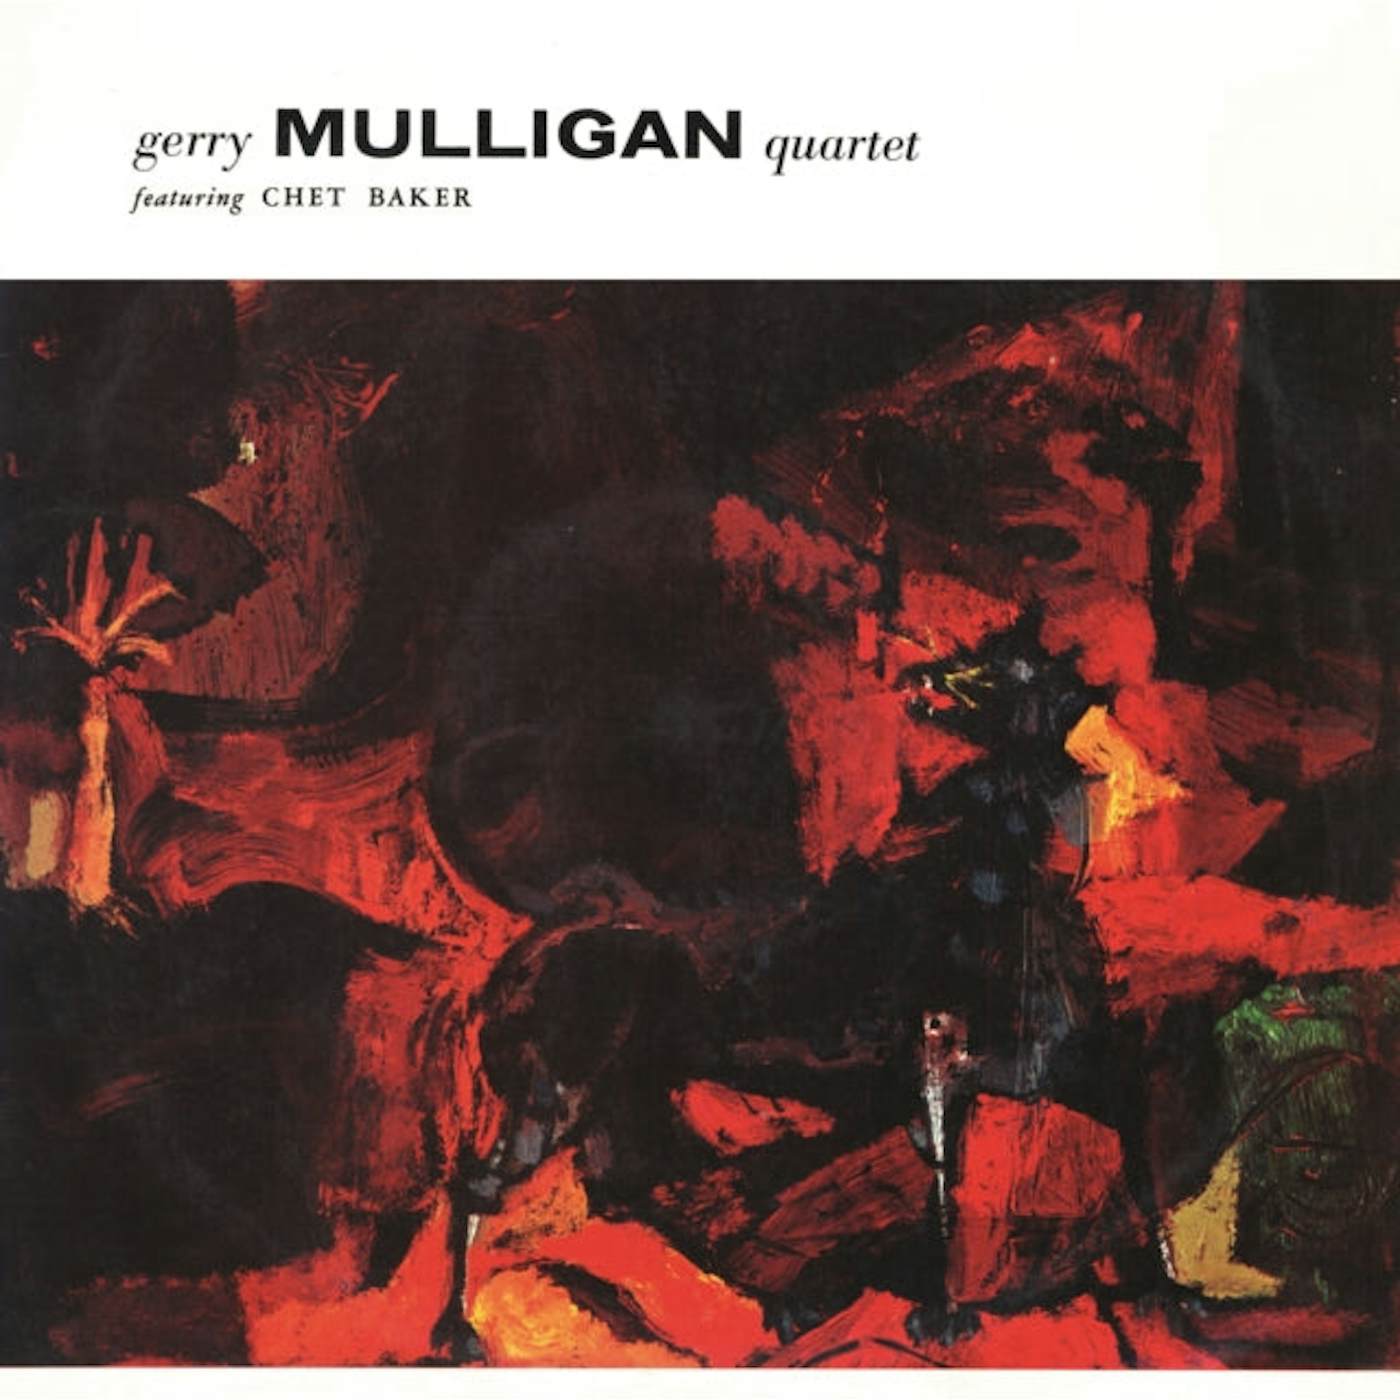 Gerry Mulligan Quartet LP Vinyl Record - Gerry Mulligan Quartet (Feat. Chet Baker)